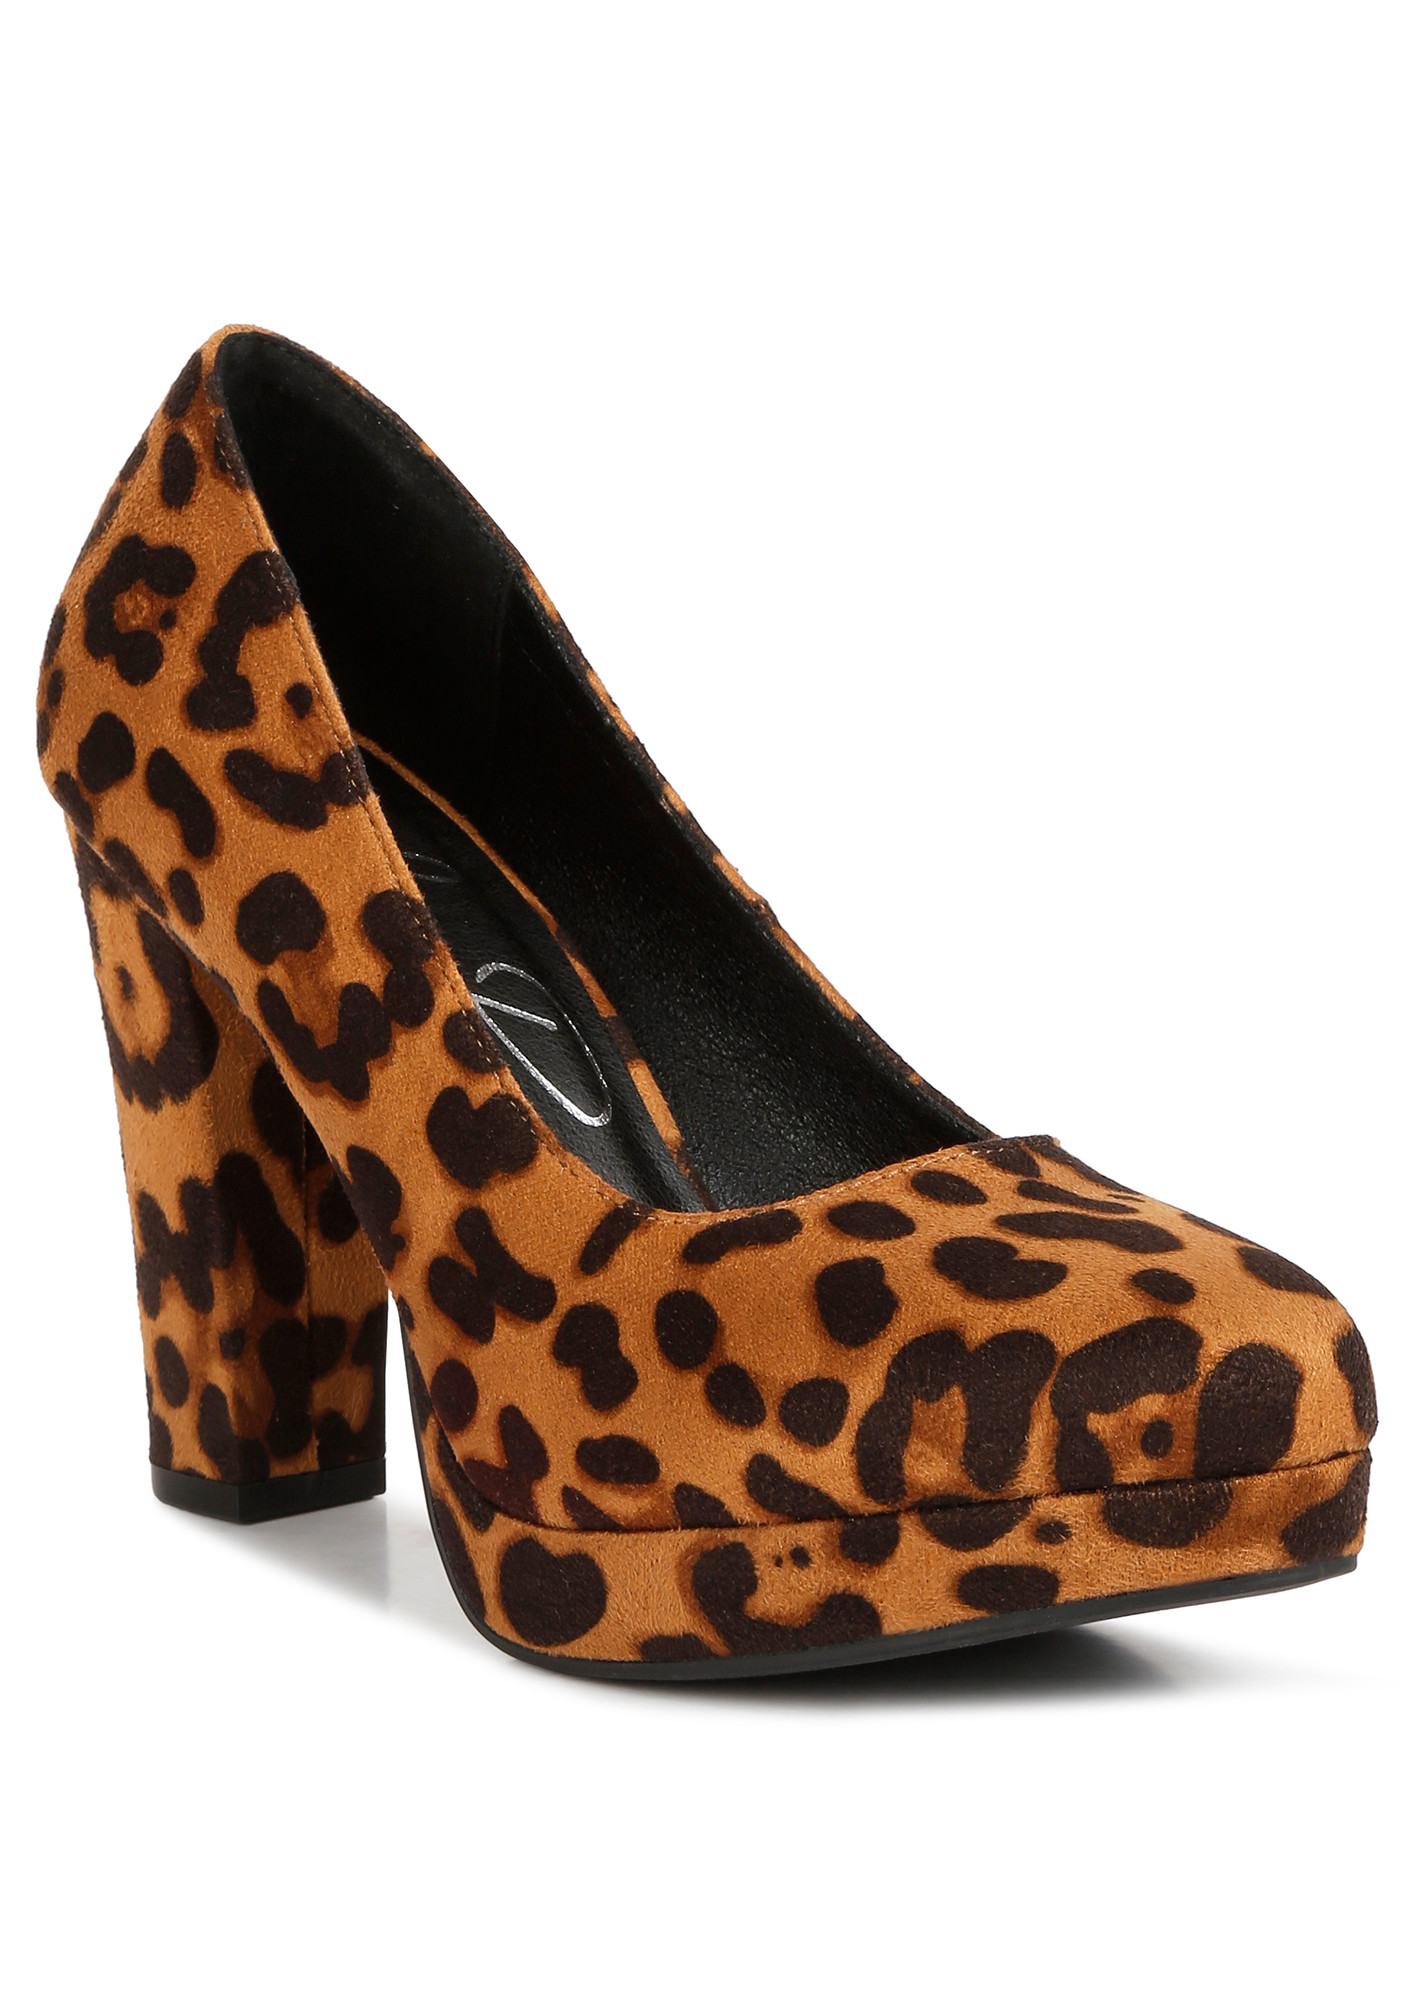 Block-heeled court shoes - Dark brown - Ladies | H&M IN